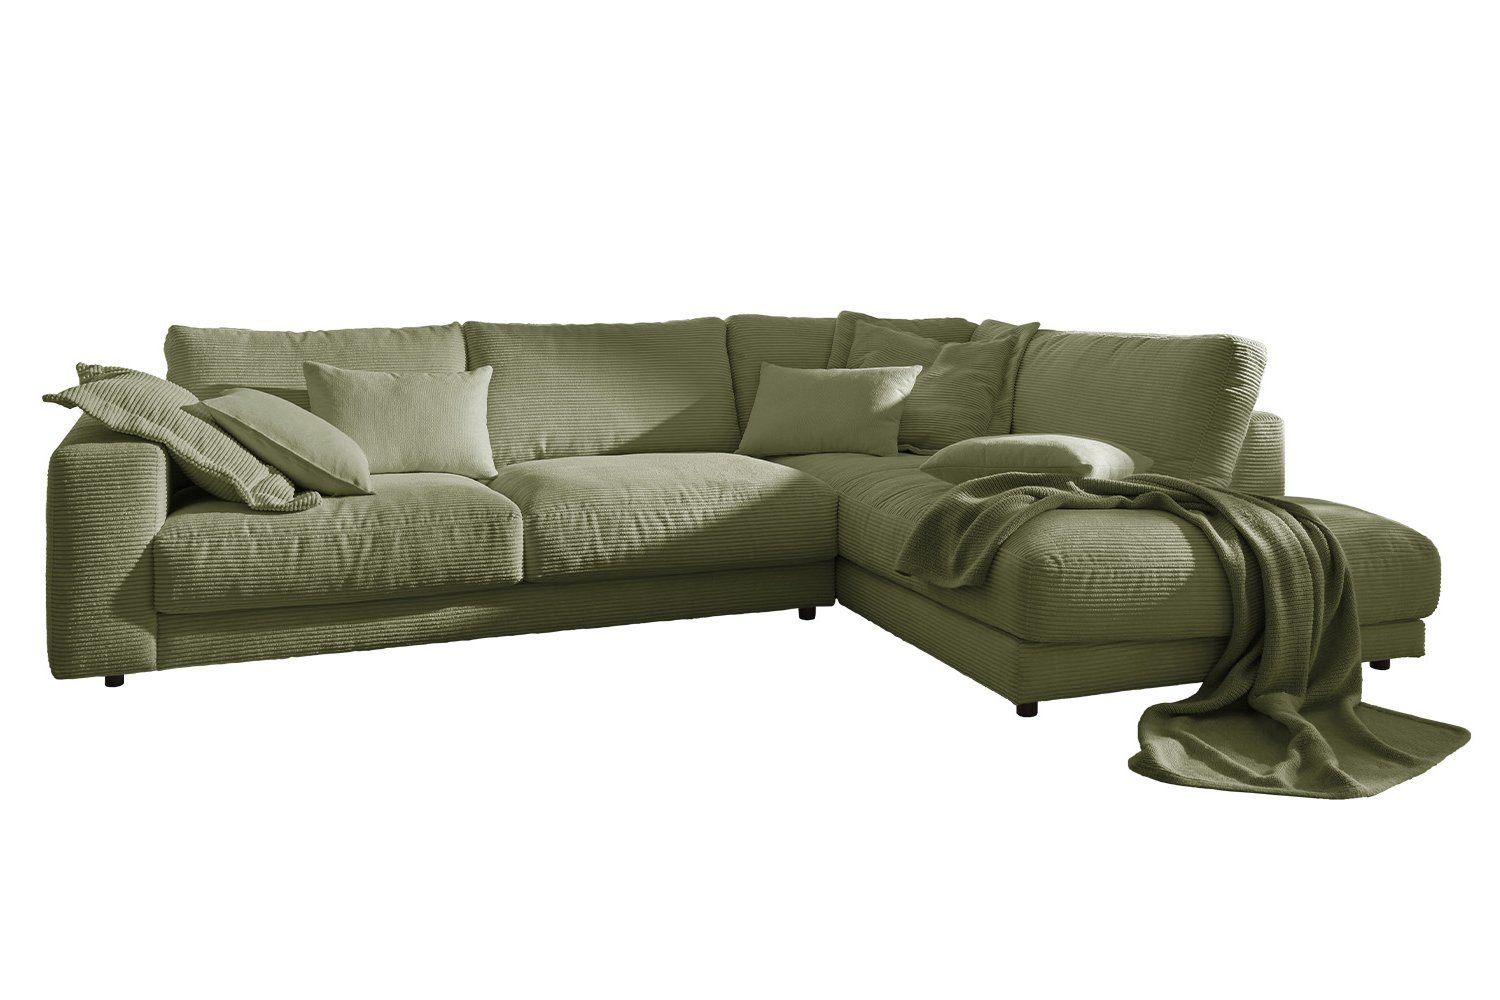 KAWOLA Ecksofa MADELINE, Sofa Recamiere rechts Farben olivgrün Cord, links, versch. od